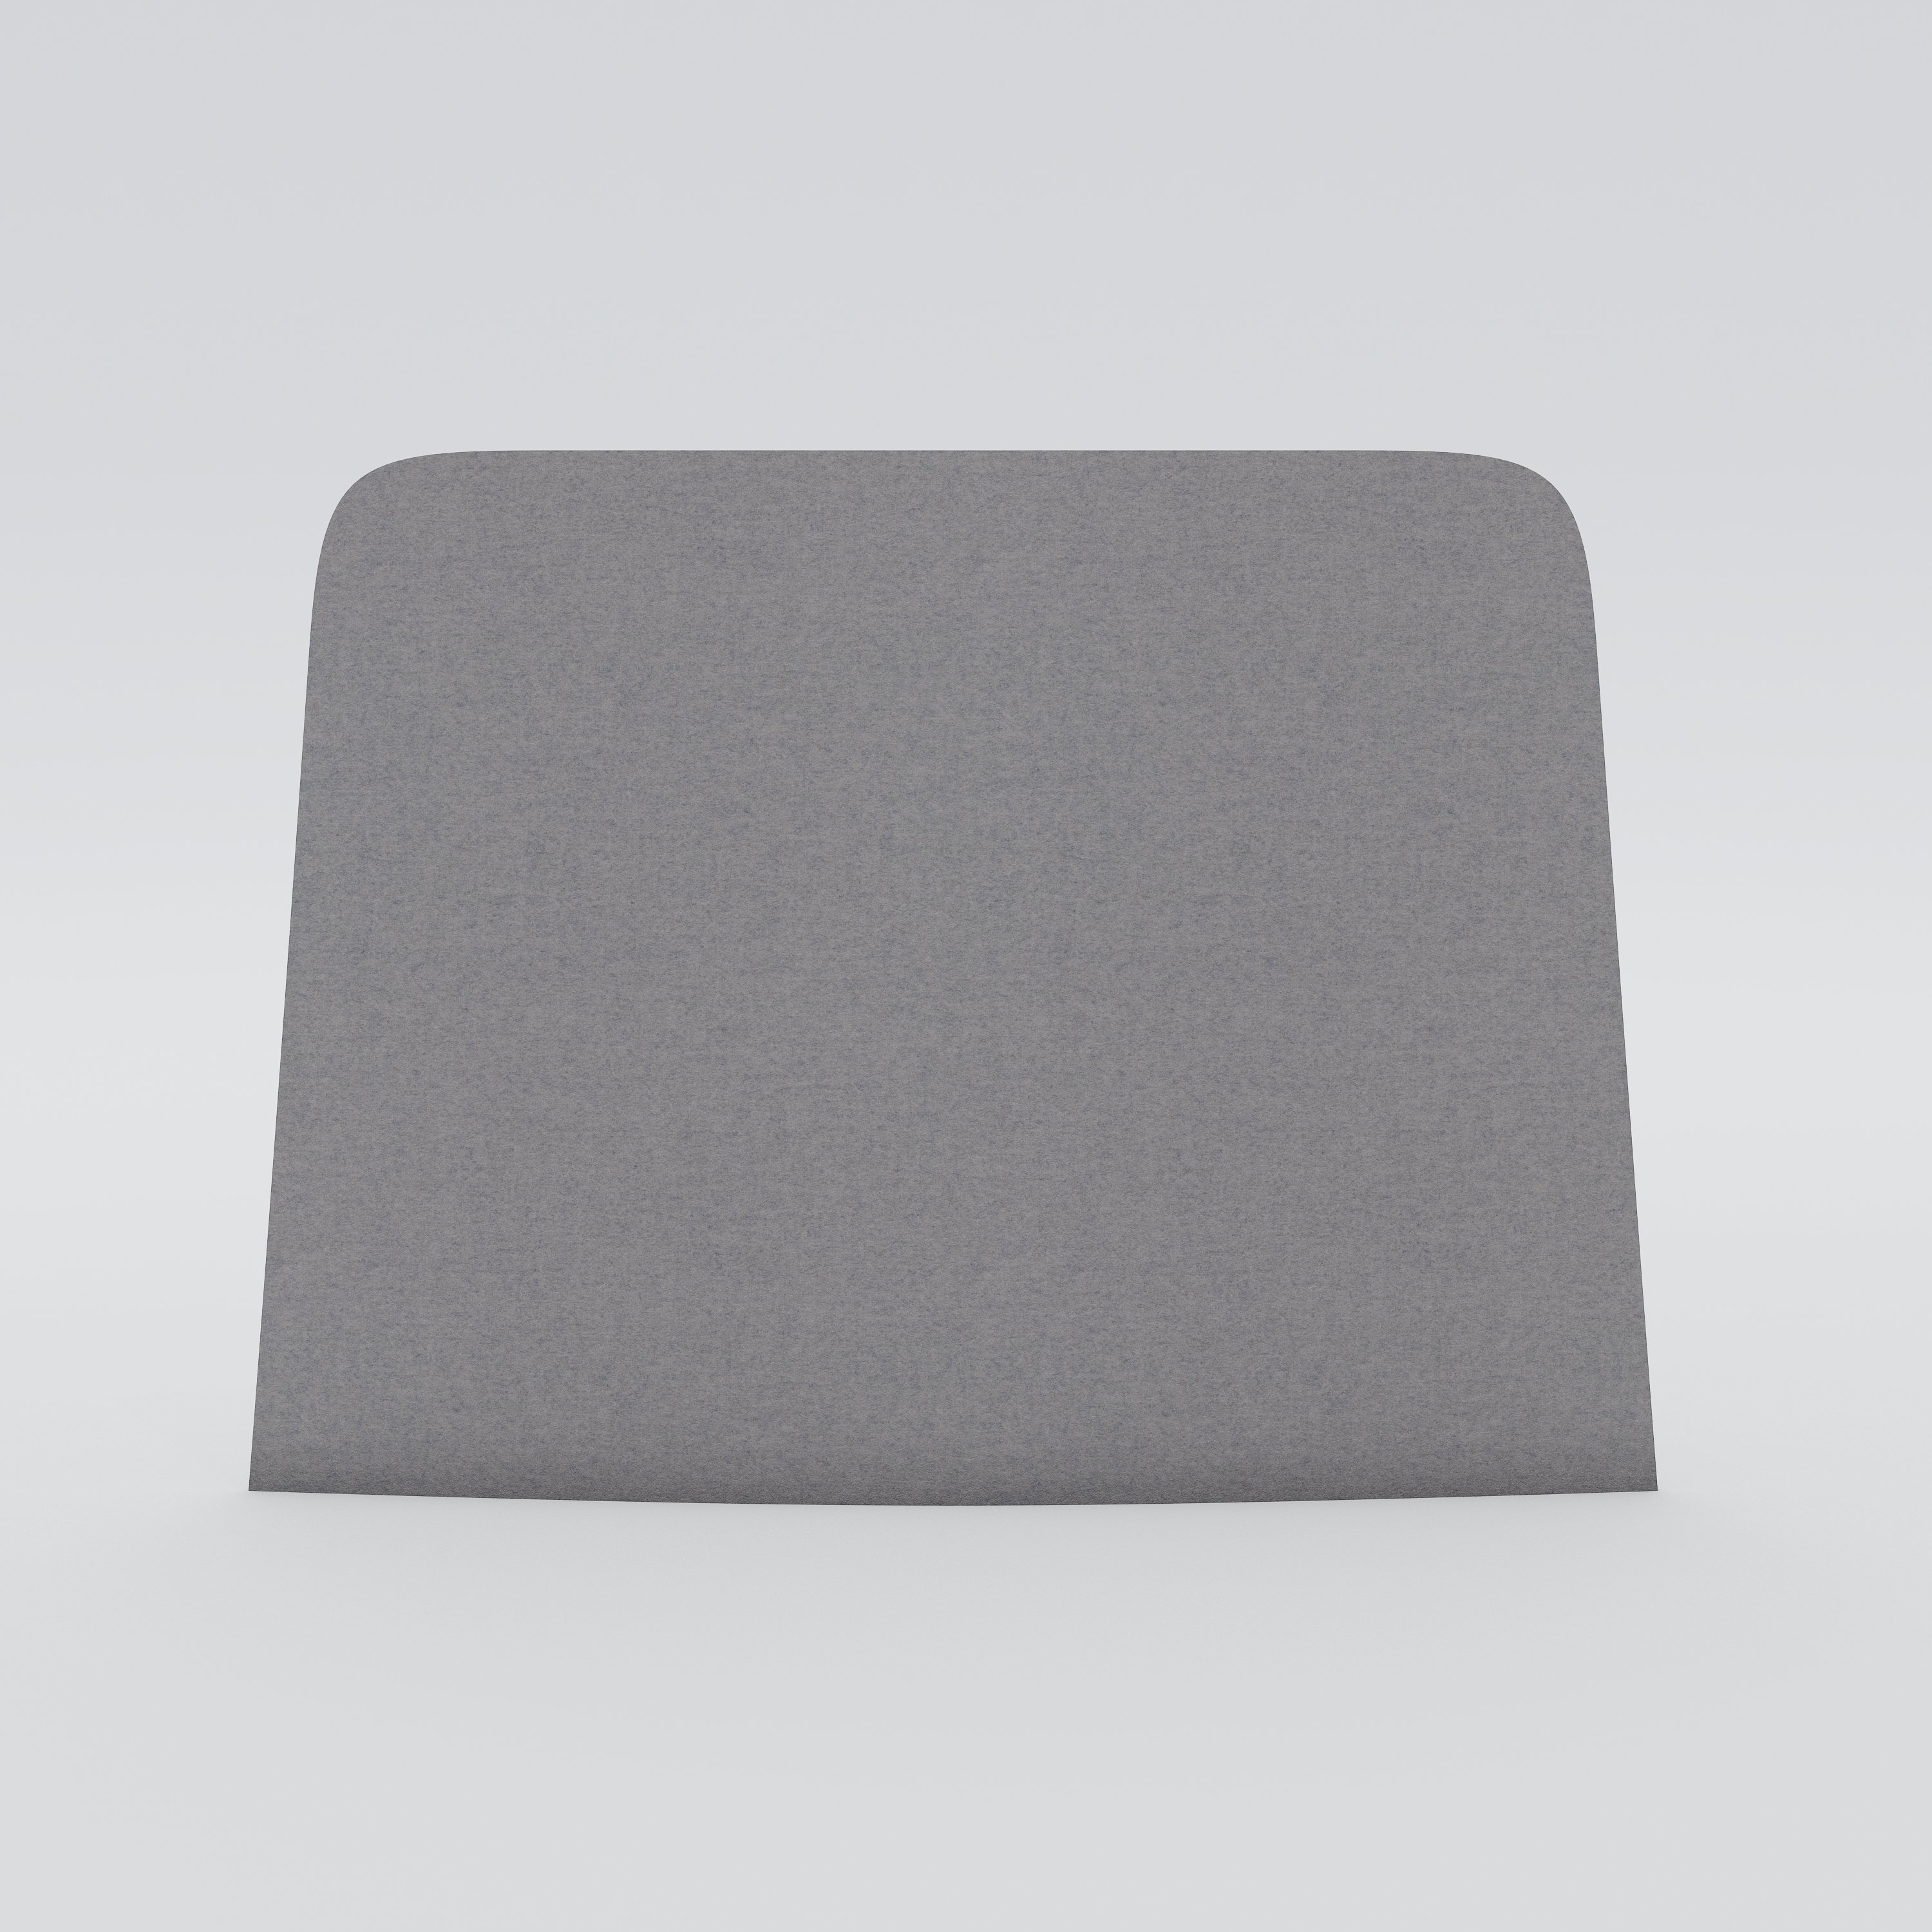 Bordsskärm Ease, ljusgrå filtklädsel, 600x450 